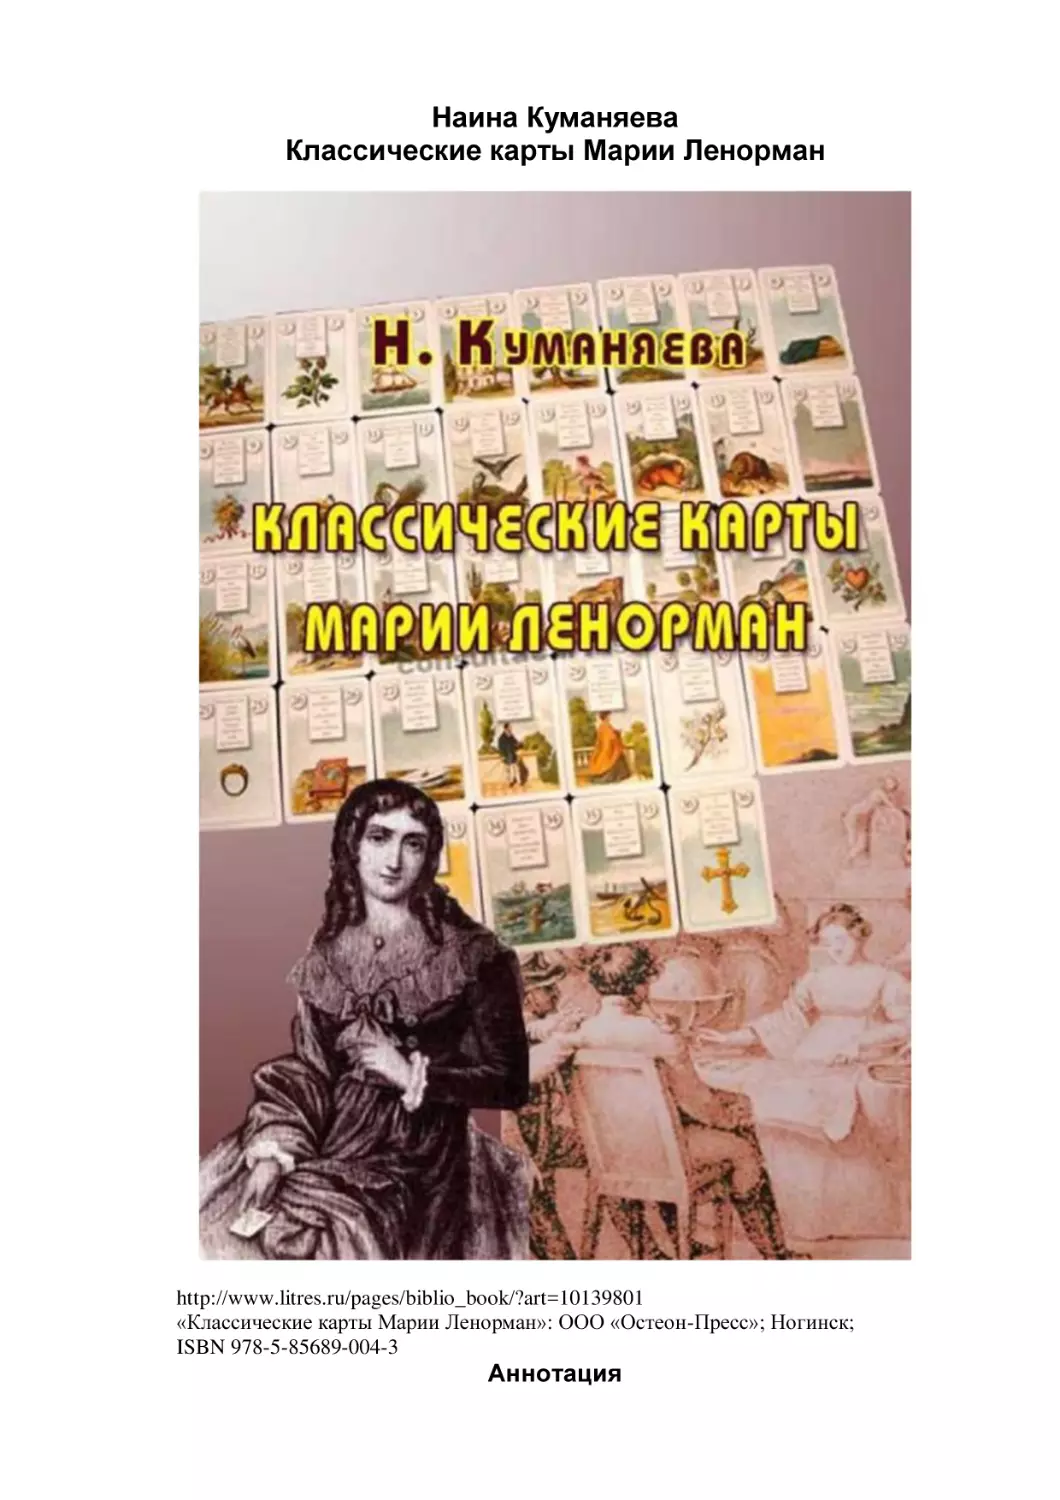 Наина Куманяева
Классические карты Марии Ленорман
Аннотация